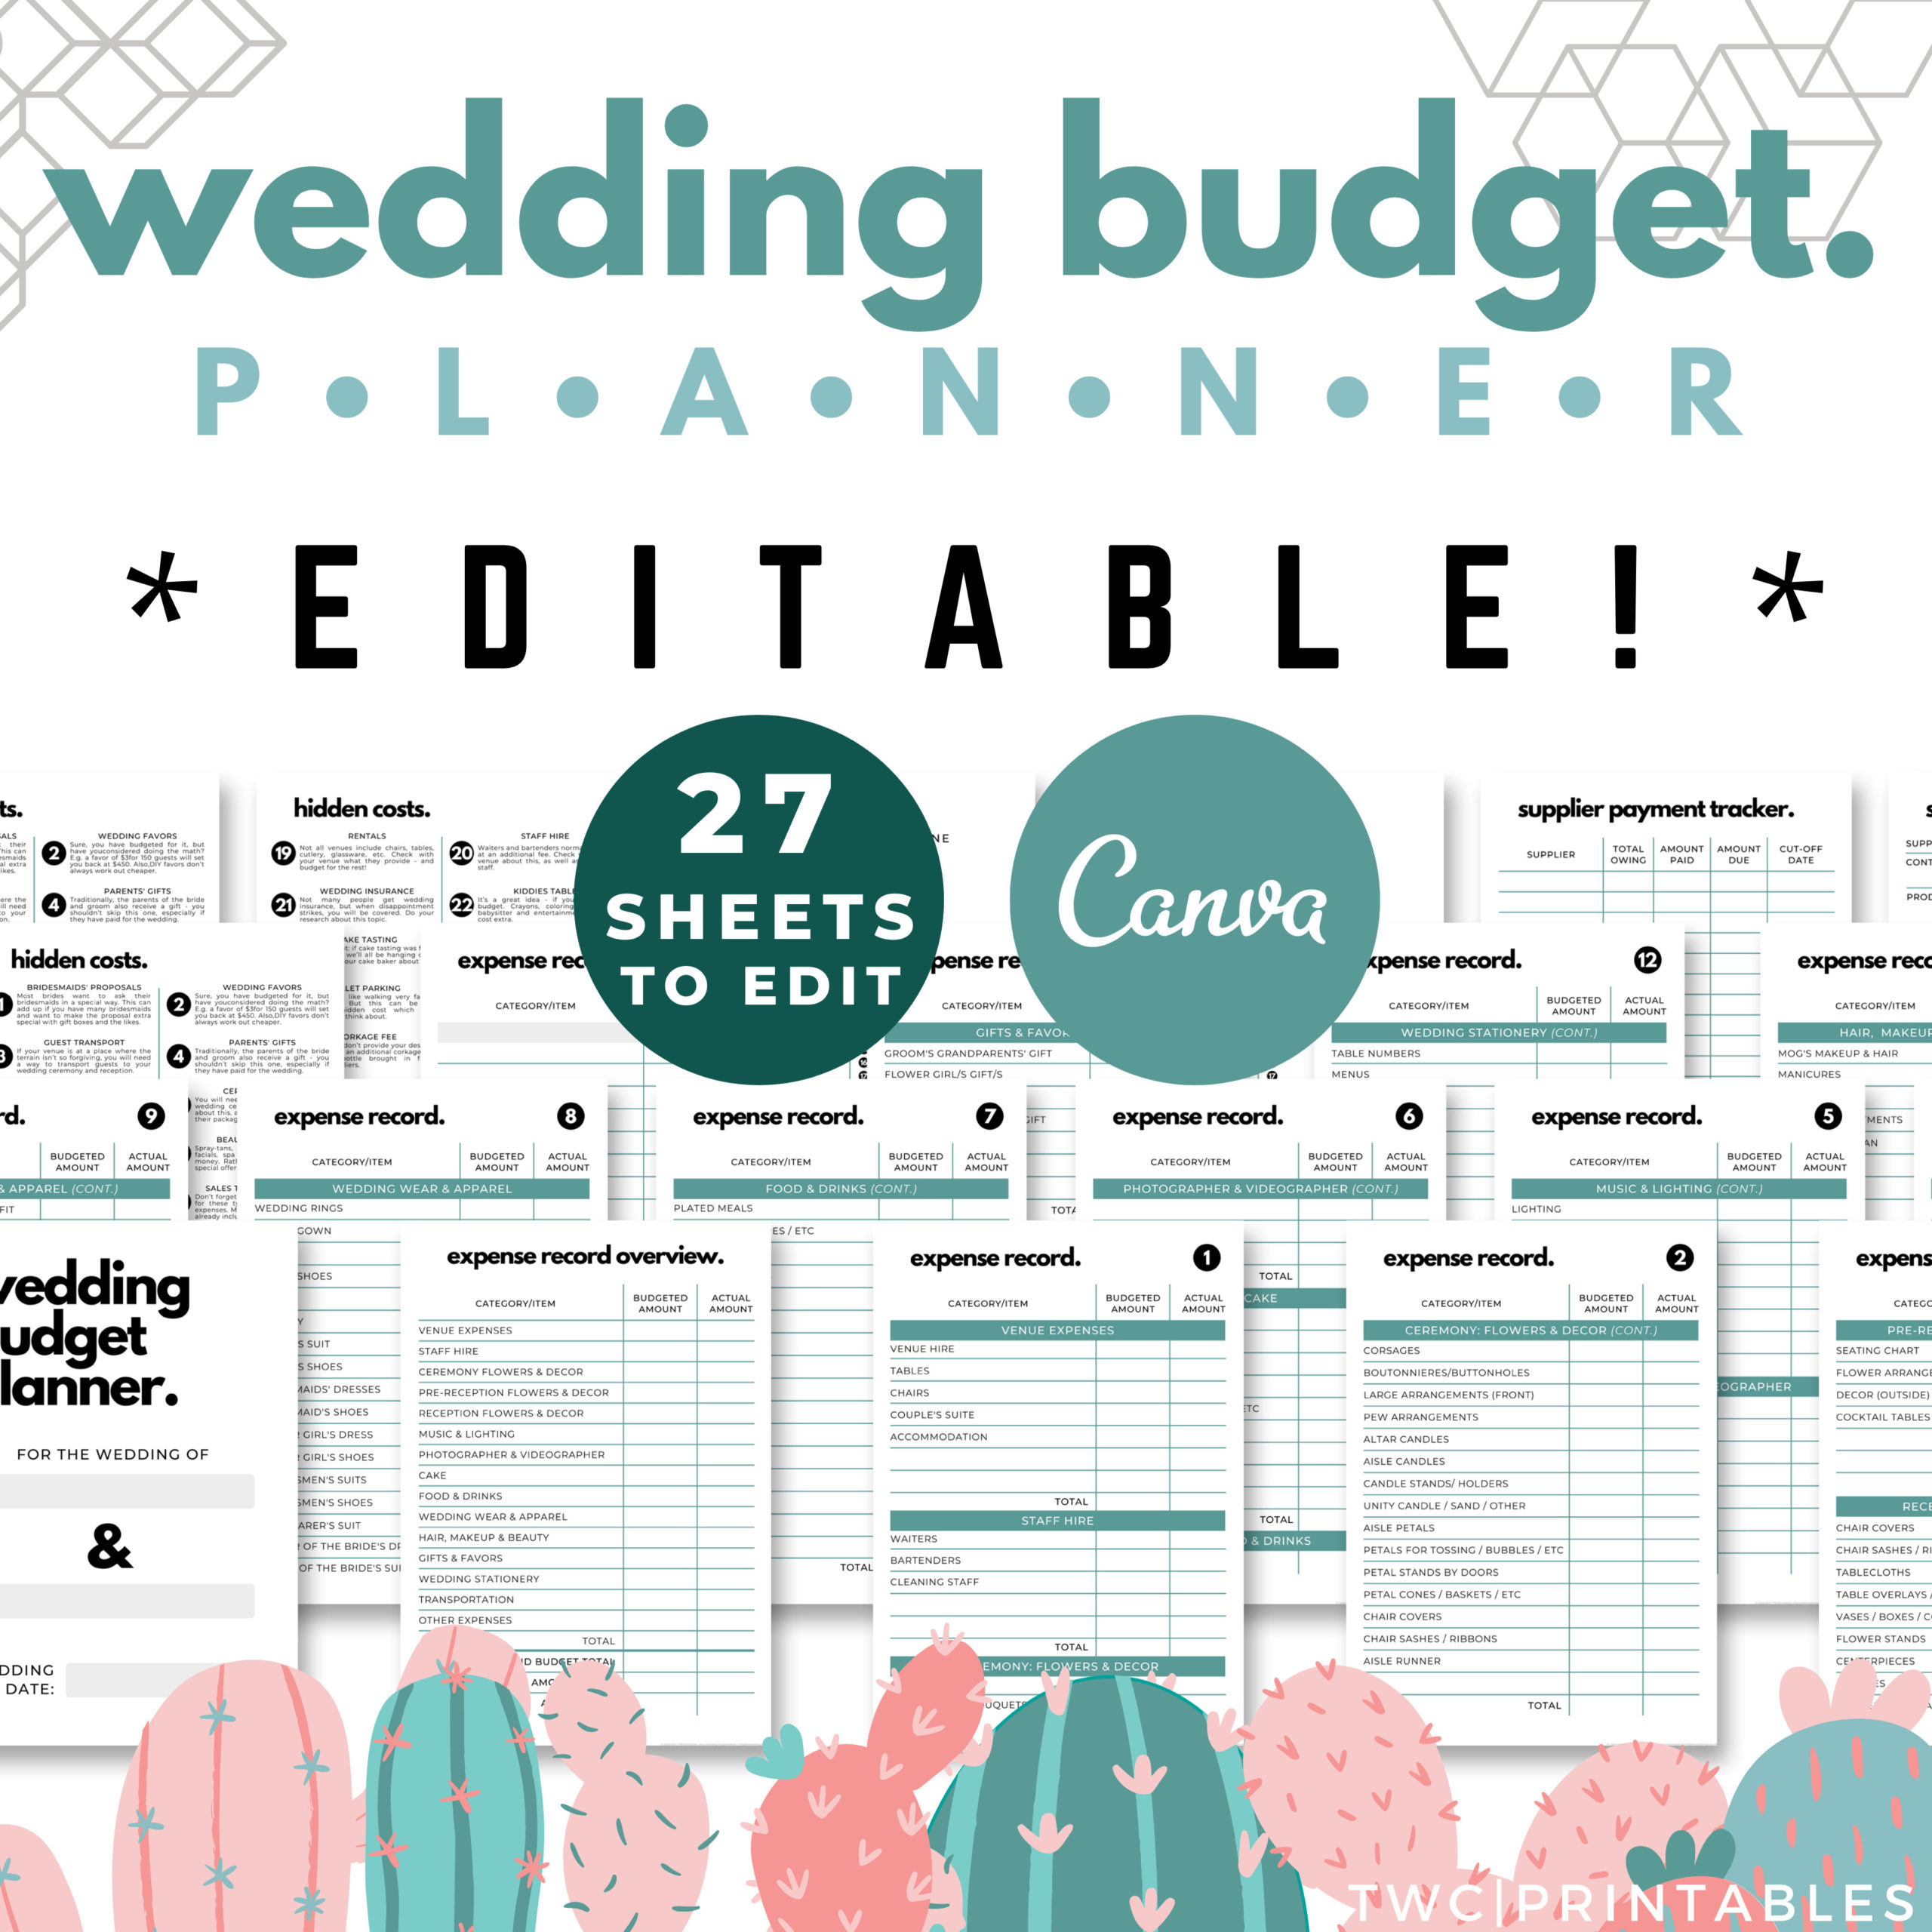 editable wedding budget templates for Canva